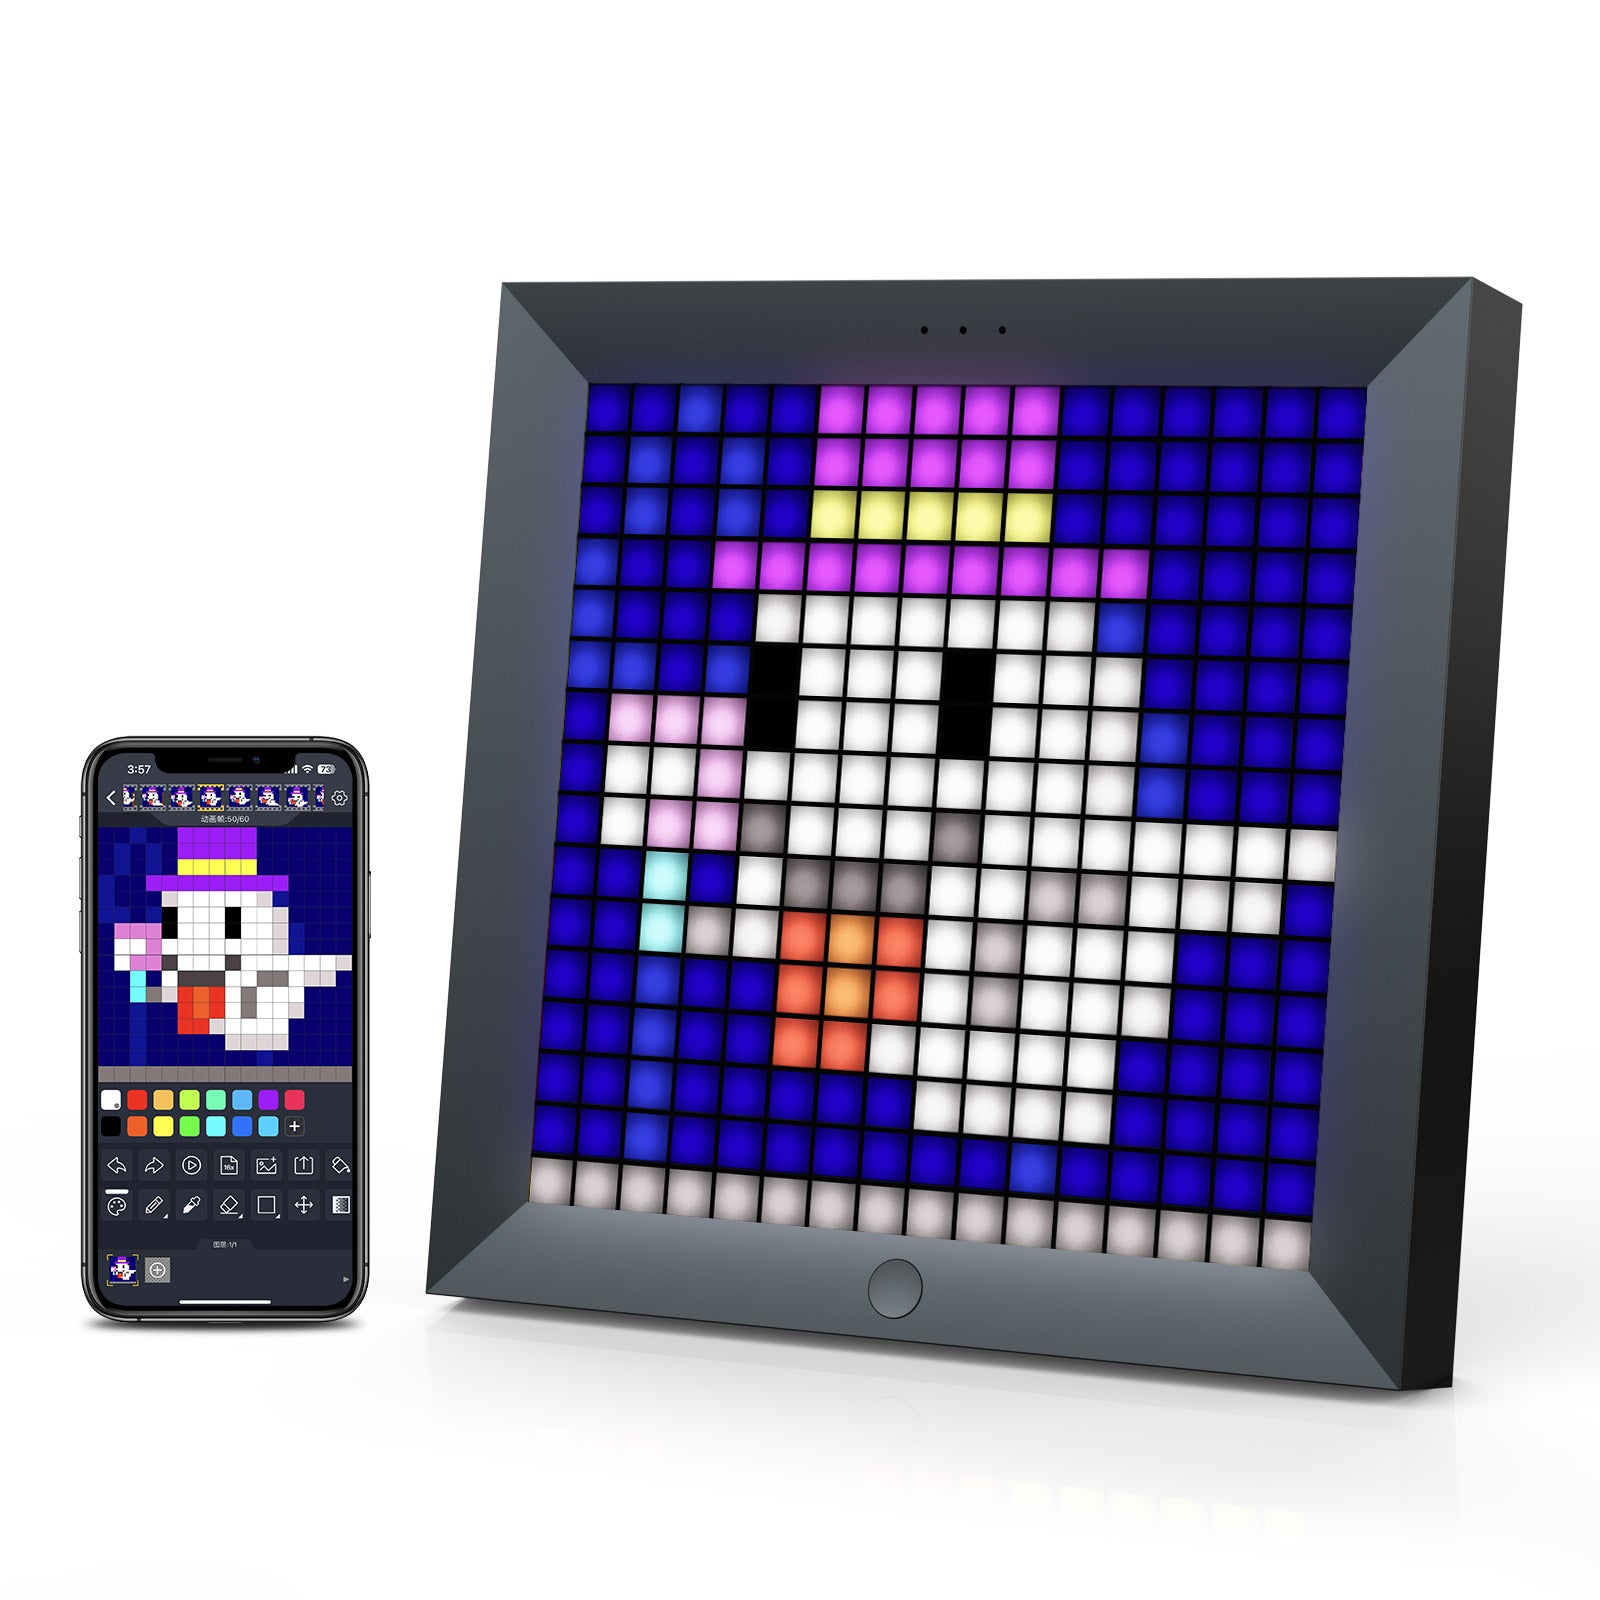 Divoom Pixoo 16x16 Pixel Art LED Display Gaming Room Decor